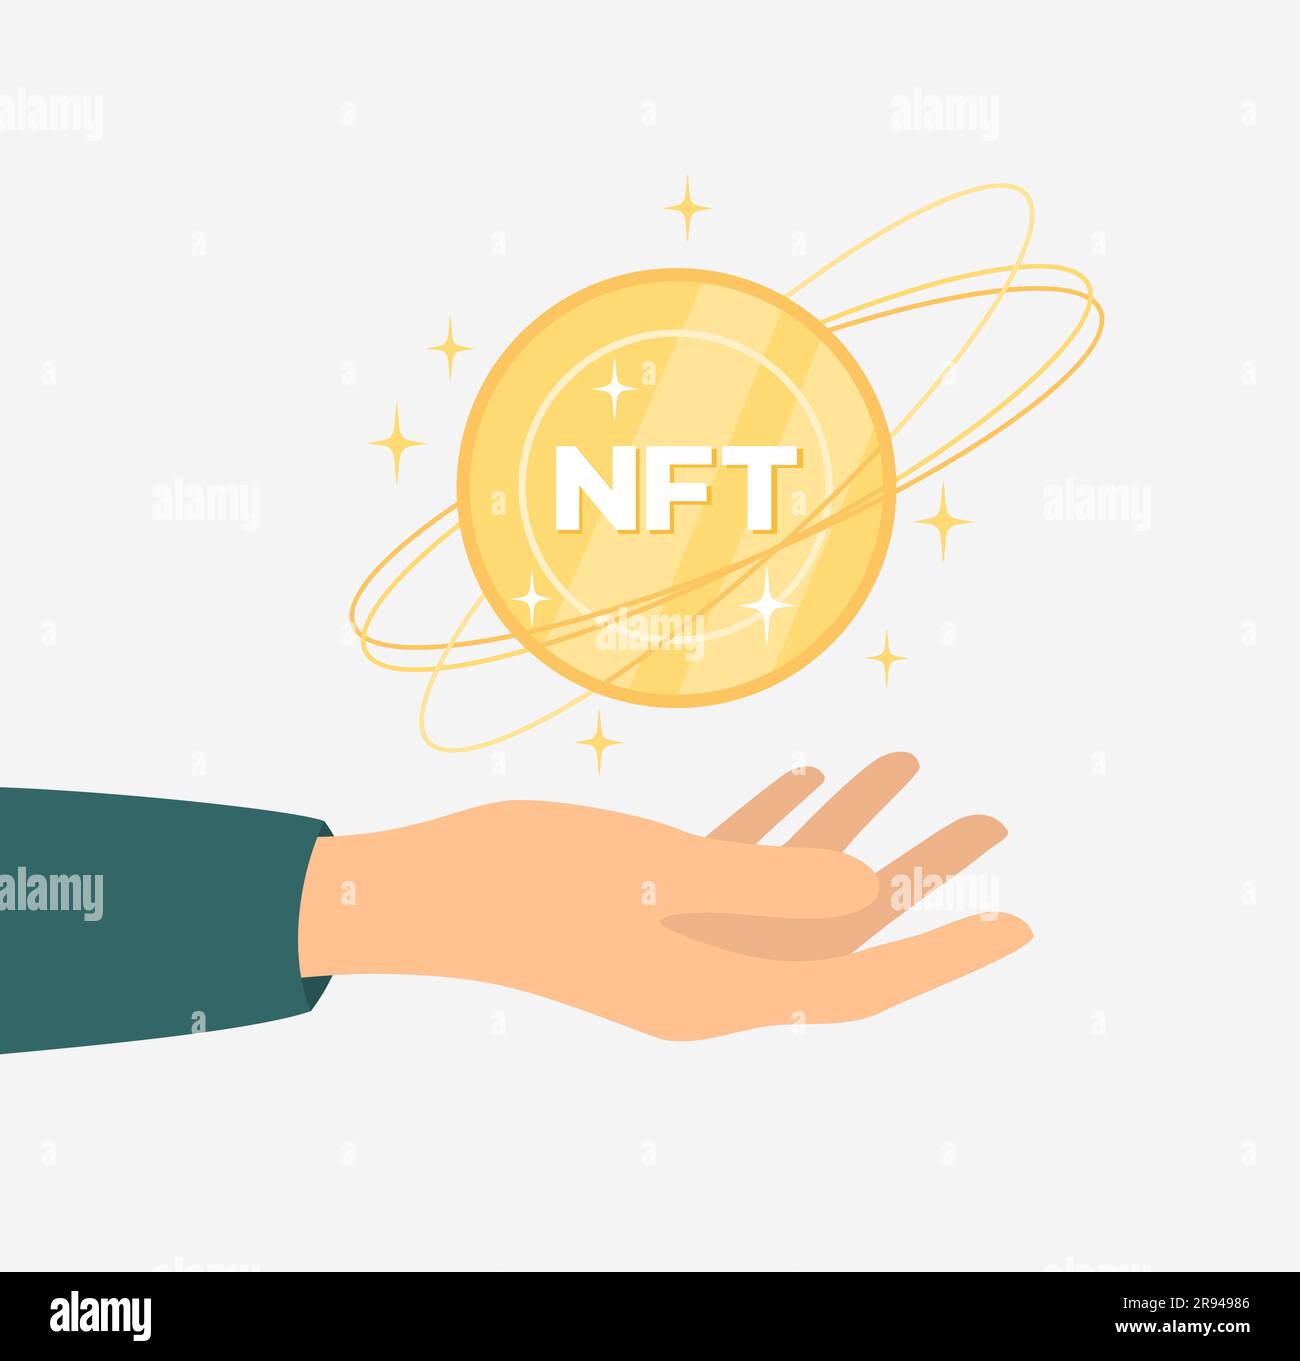 Hand holding NFT - non fungible token. Flat vector illustration Stock Vector